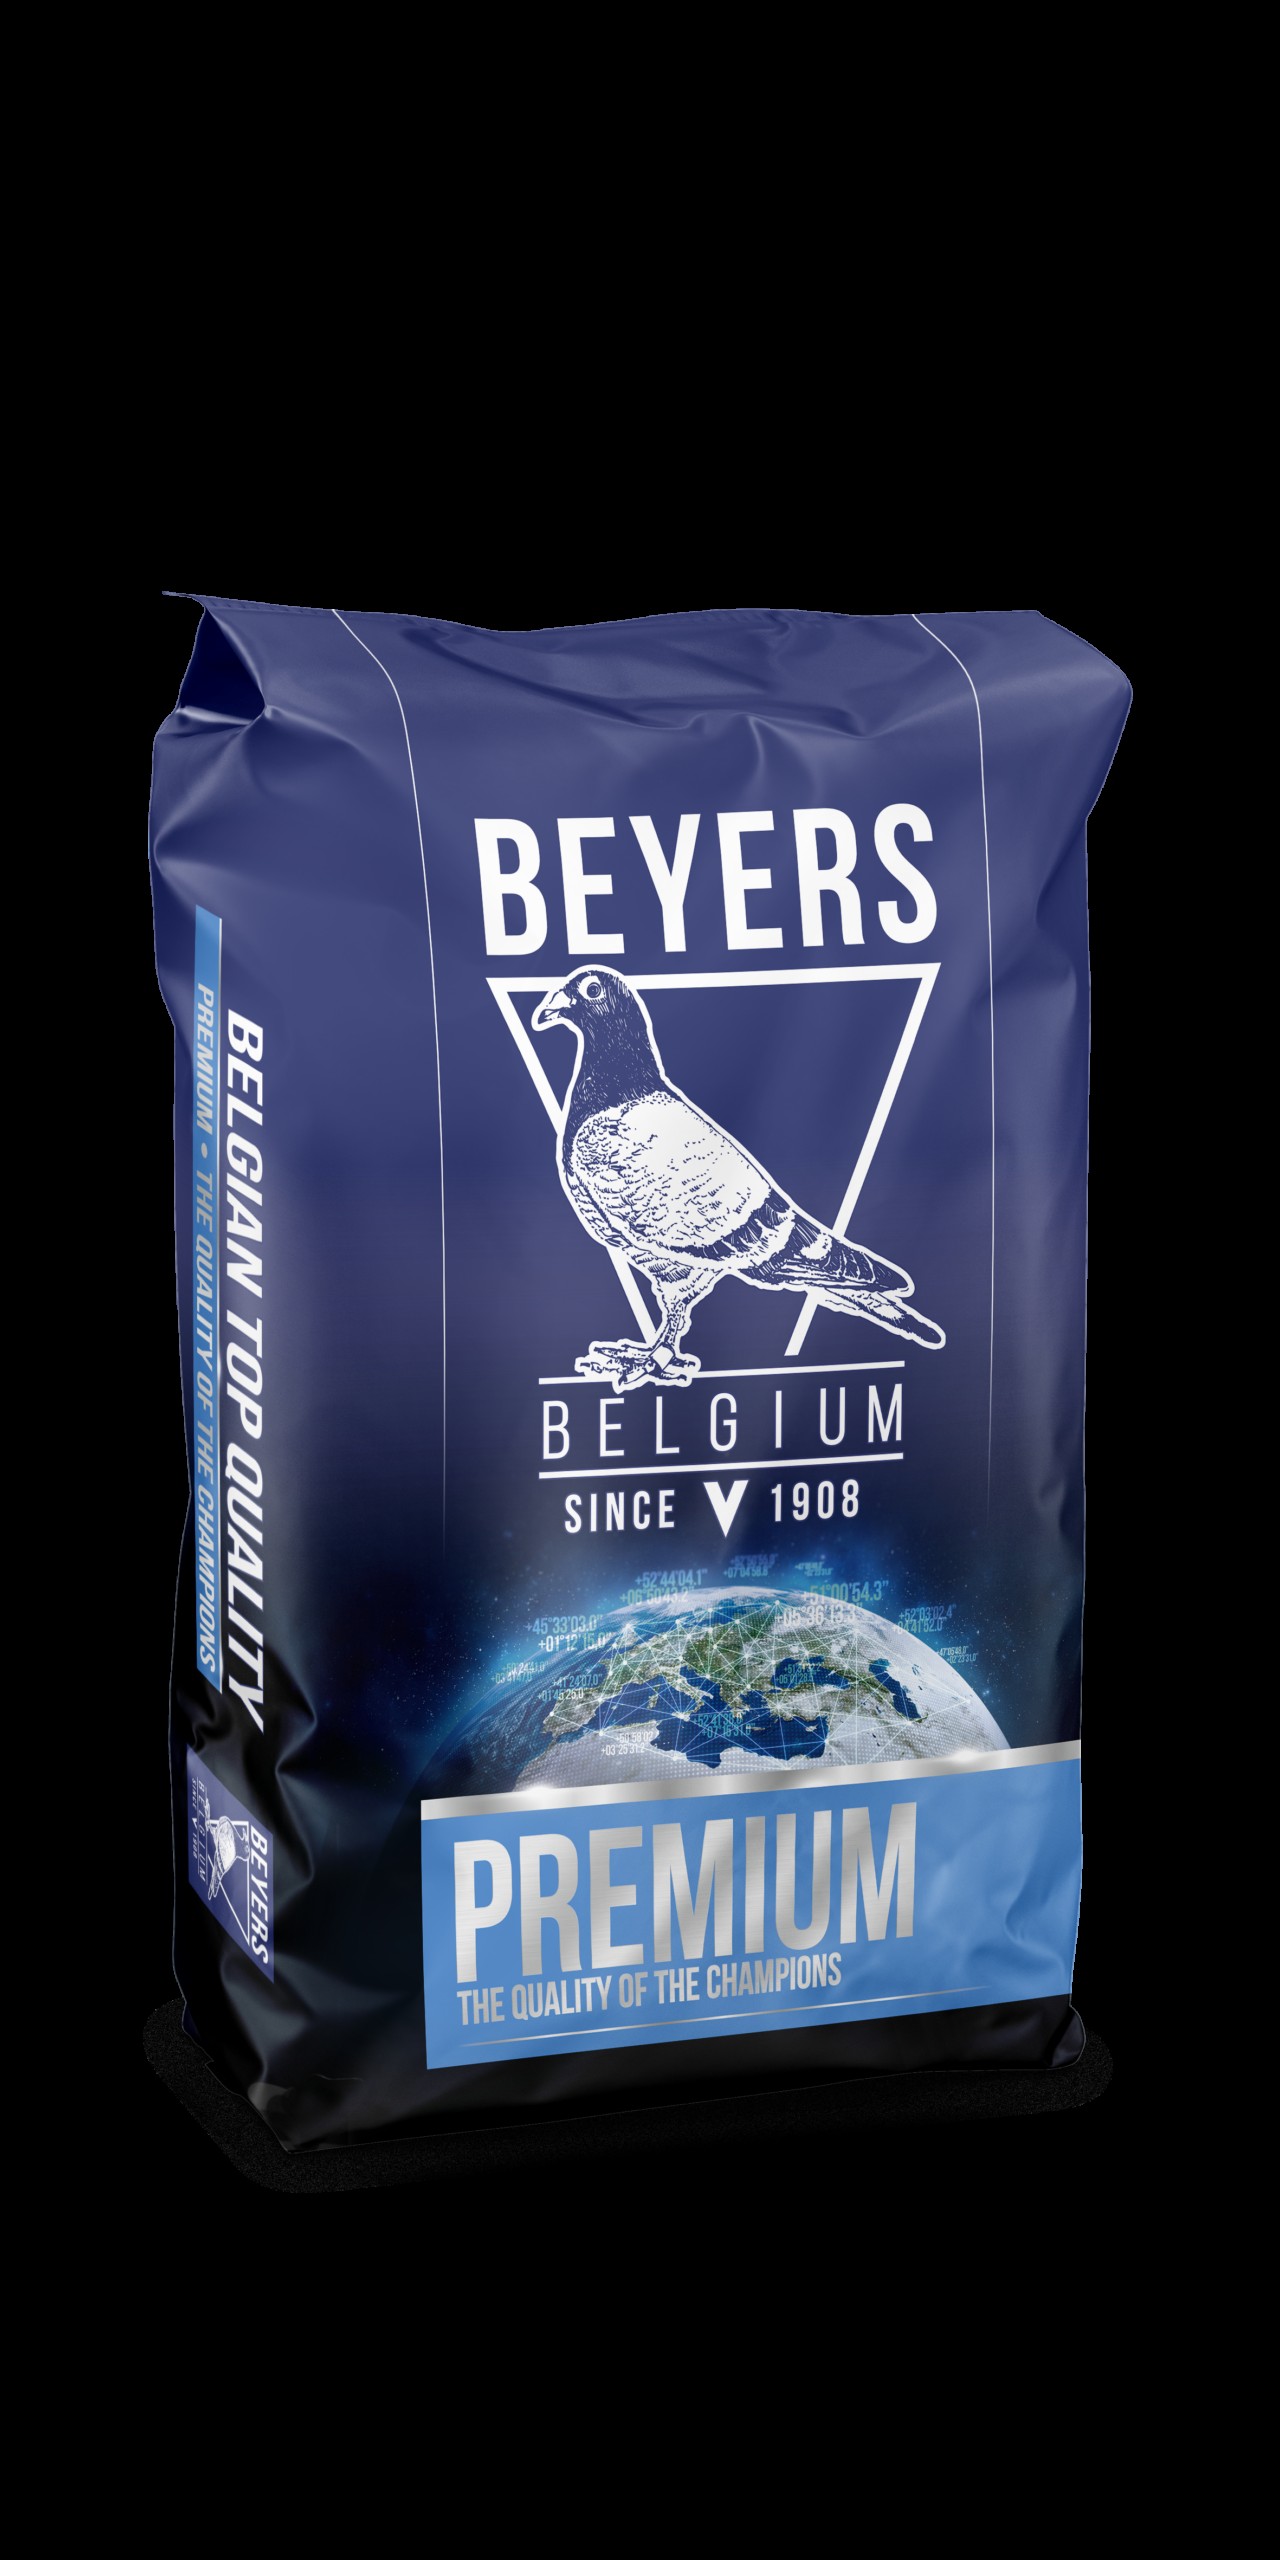 Beyers Premium wal zoontjens yellow 25 kg